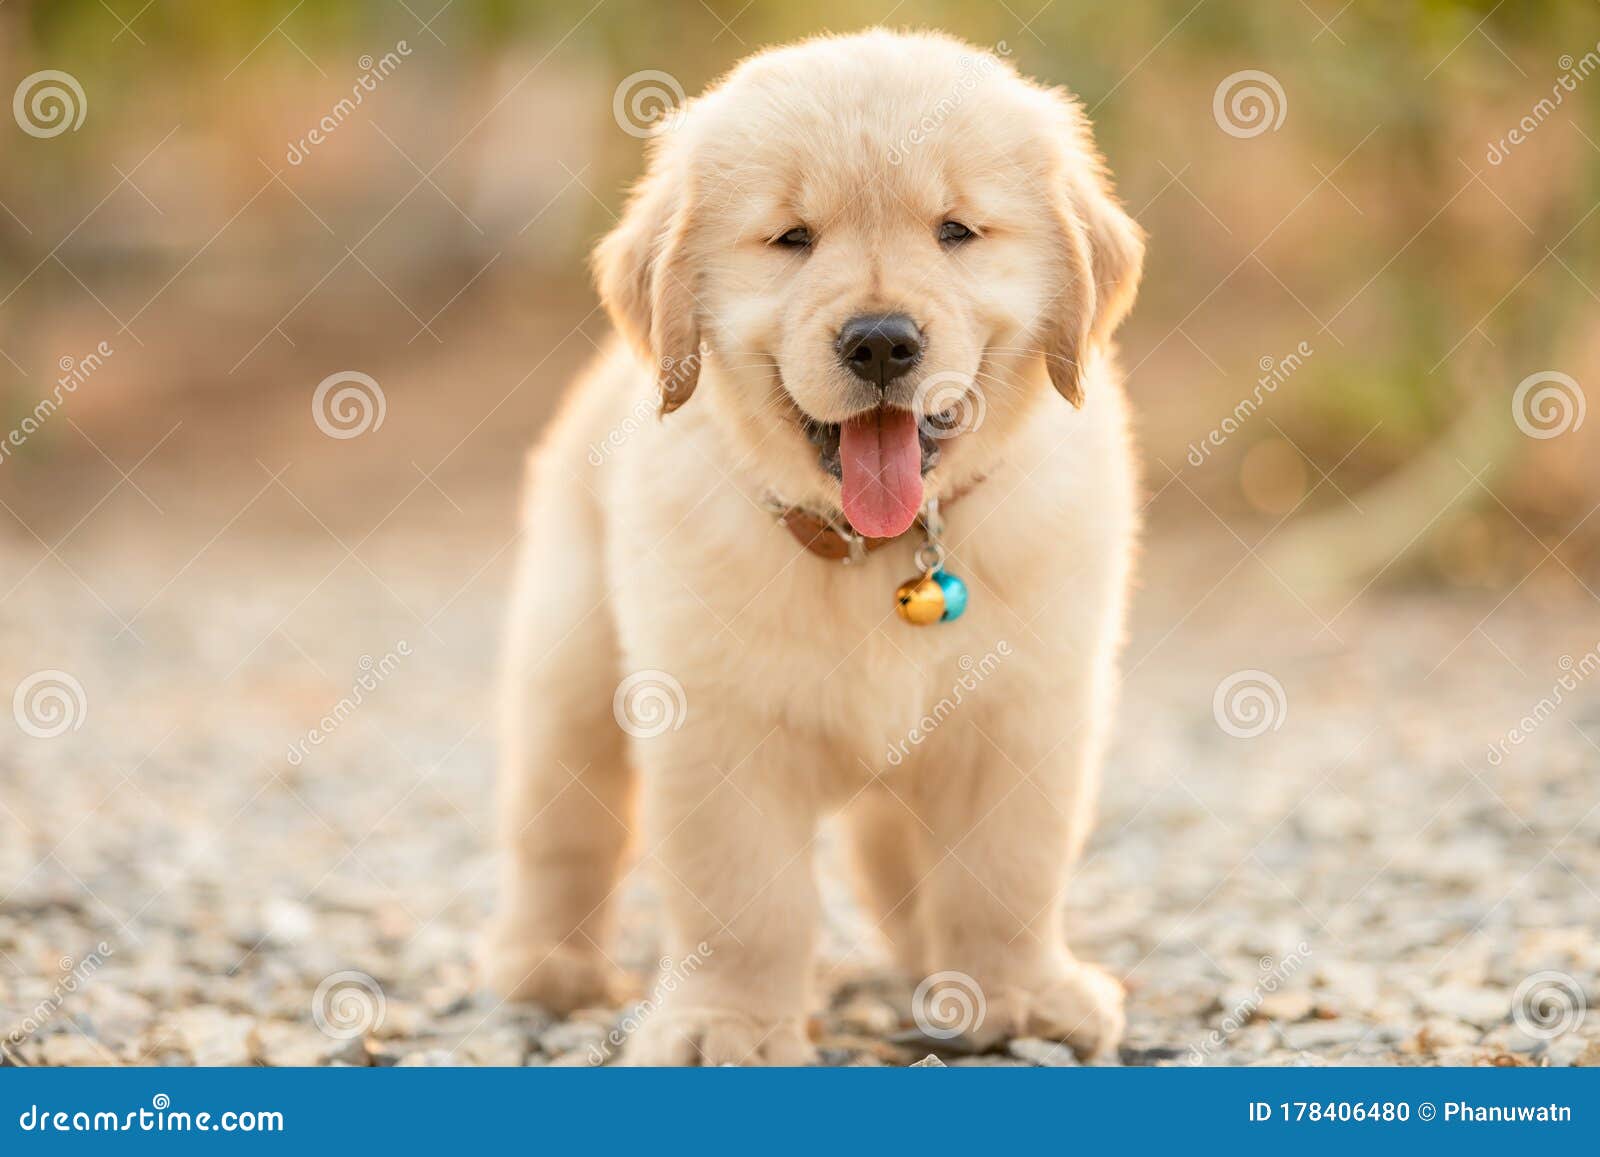 Cute Puppy Golden Retriever Standing in the Outdoor Garden on Blur ...